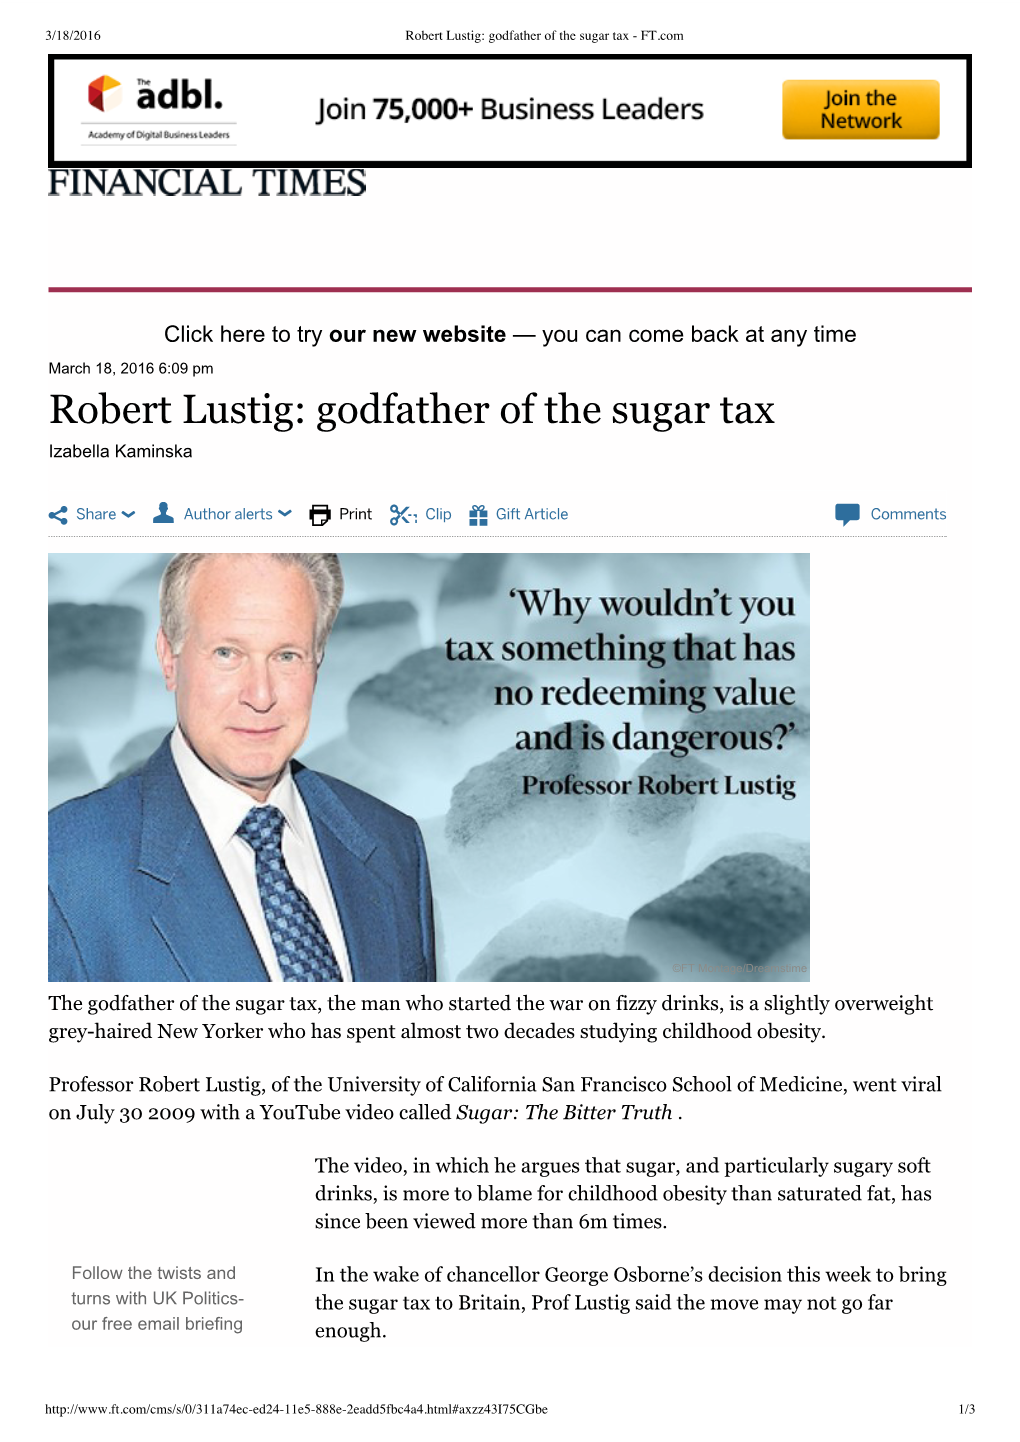 Robert Lustig: Godfather of the Sugar Tax - FT.Com